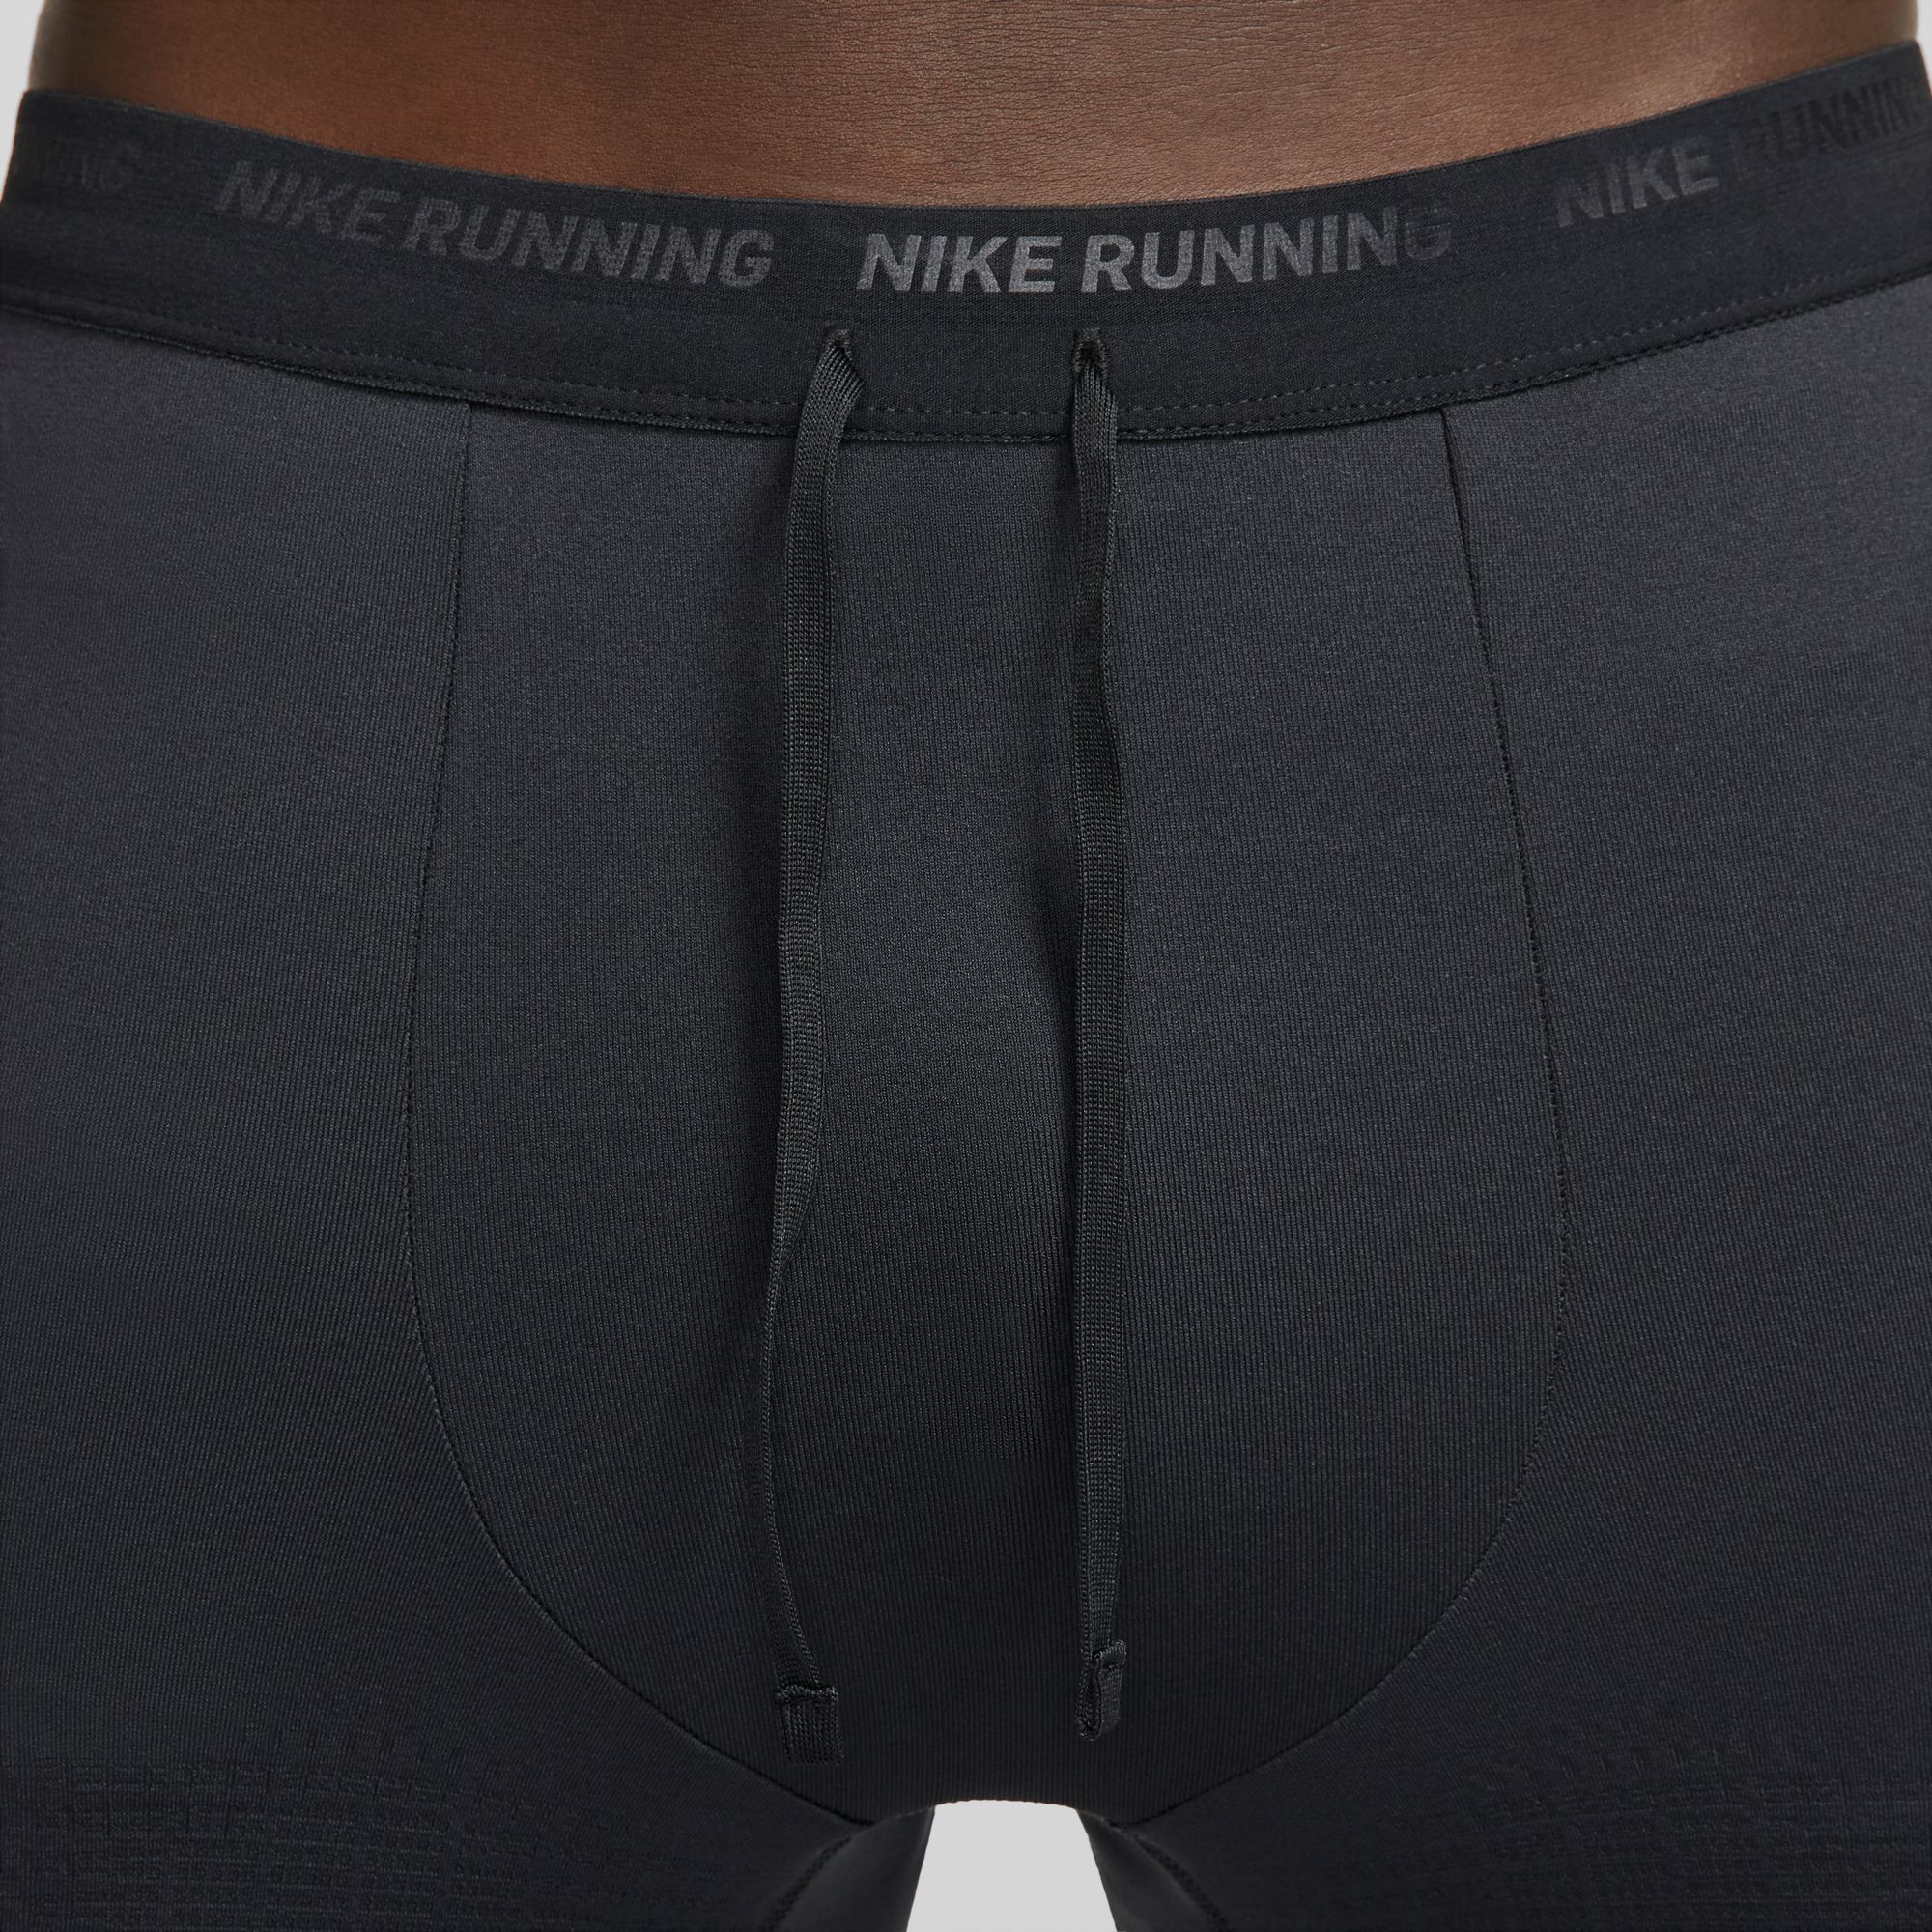 Nike Men's Phenom Elite Running Tights